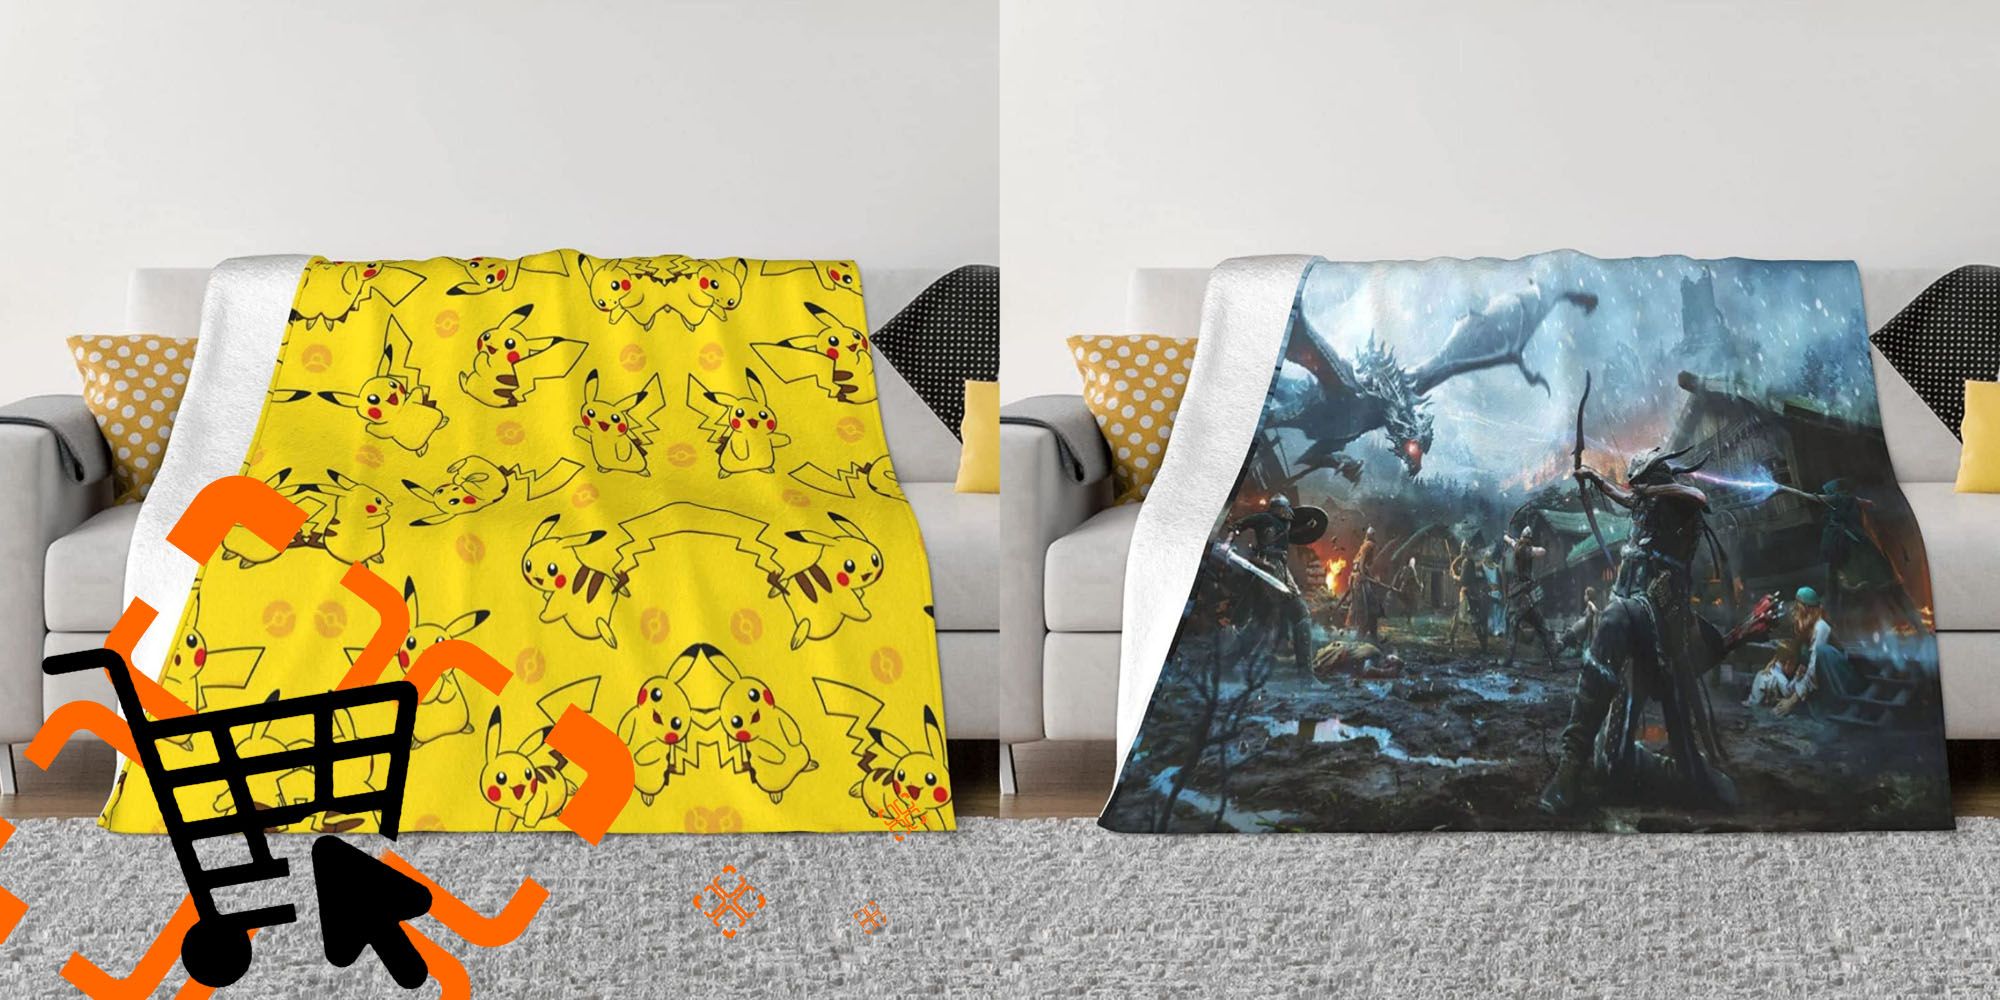 Split image screenshots of Pikachu and Skyrim blankets.